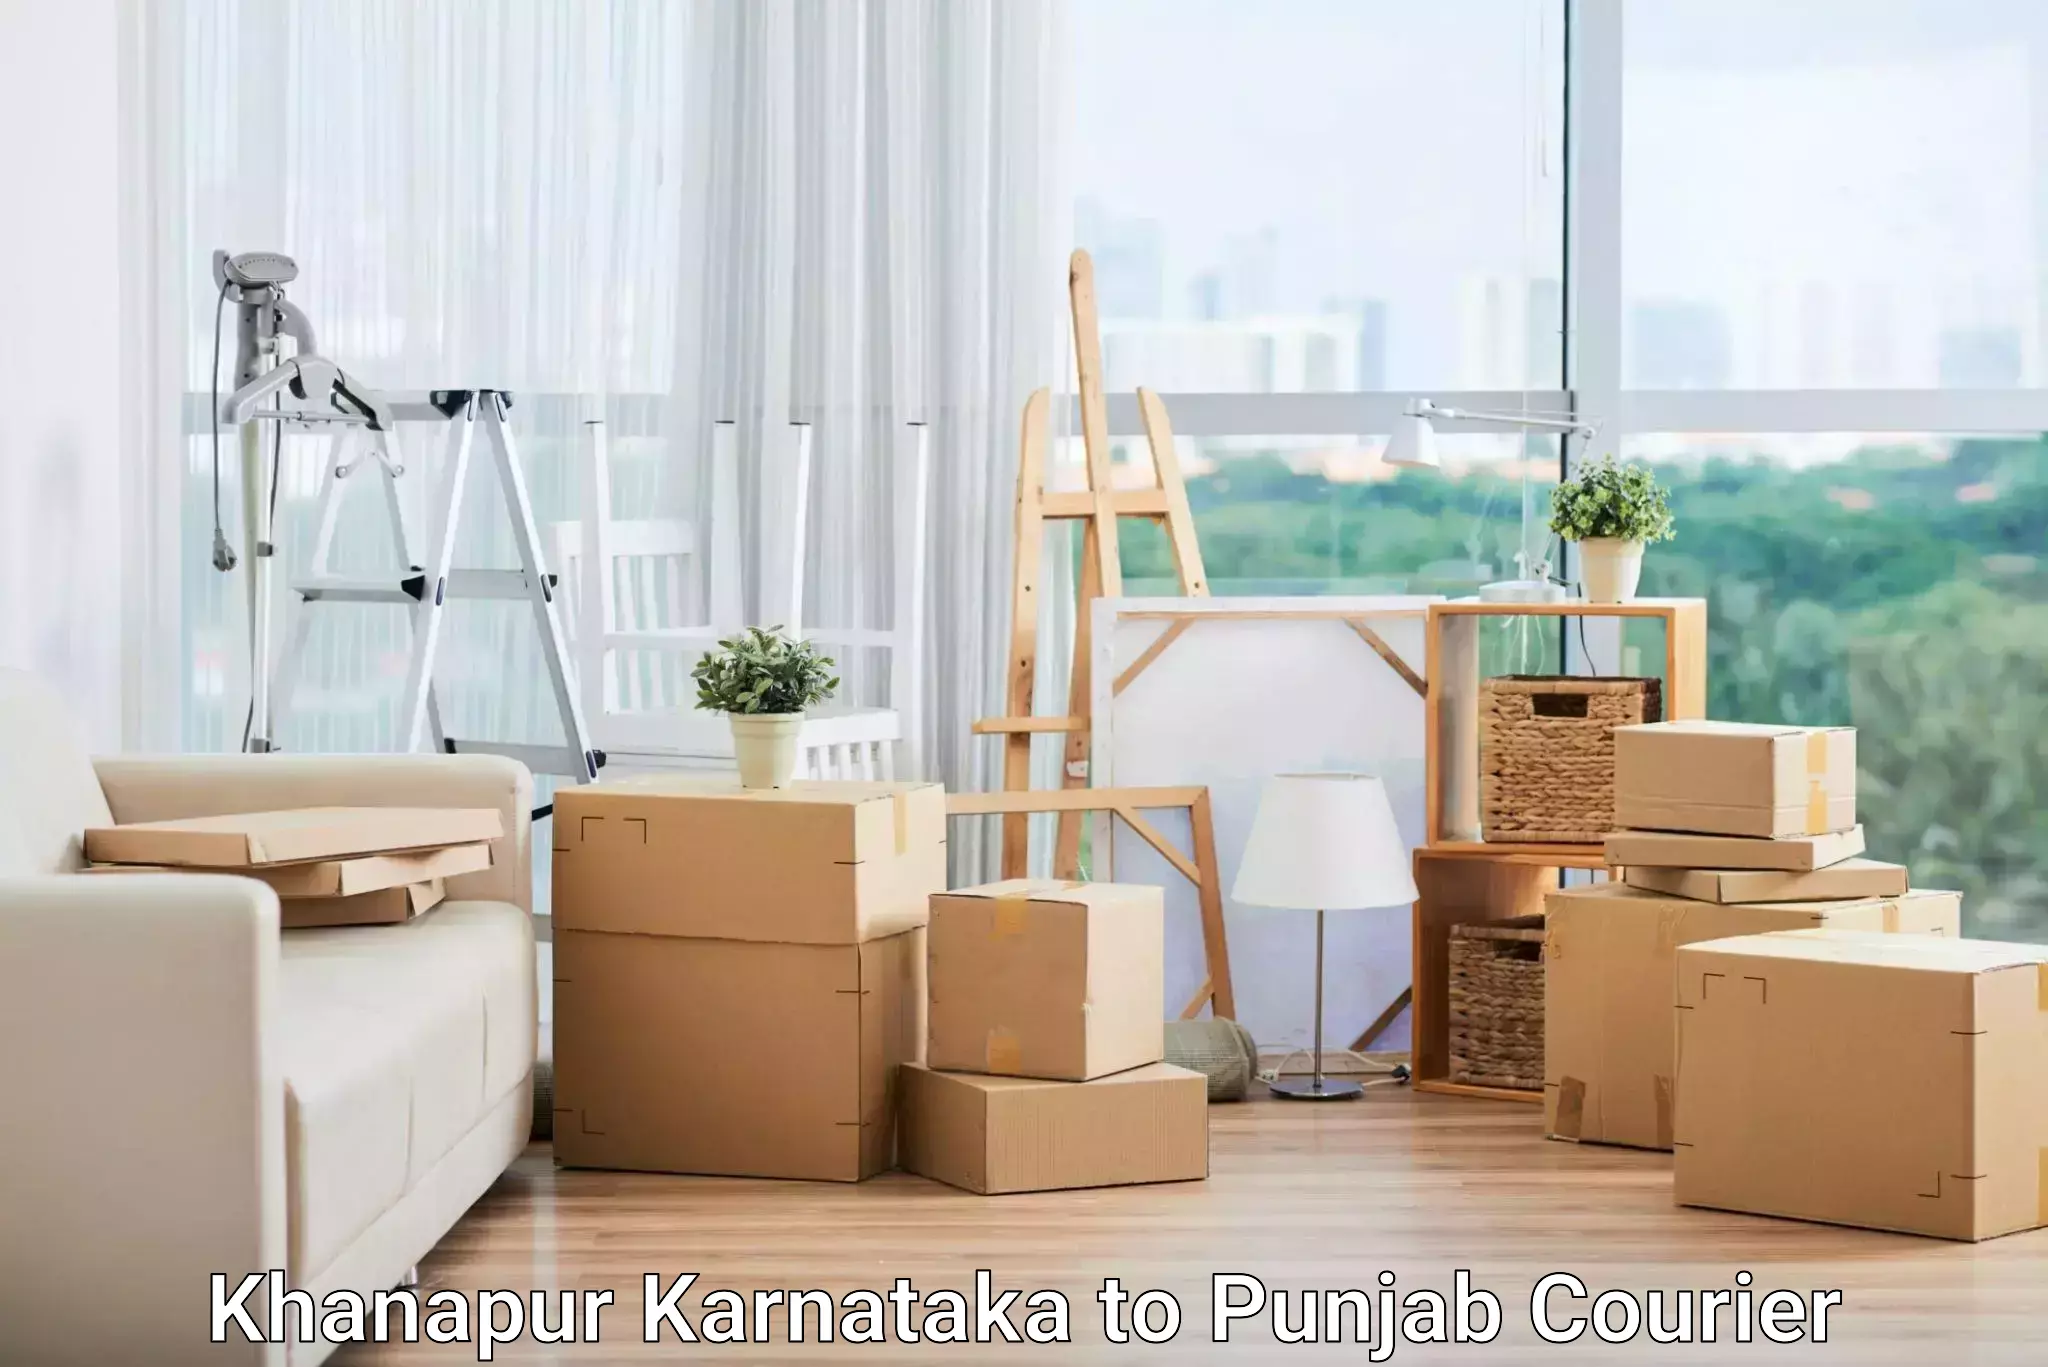 Nationwide shipping capabilities Khanapur Karnataka to Punjab